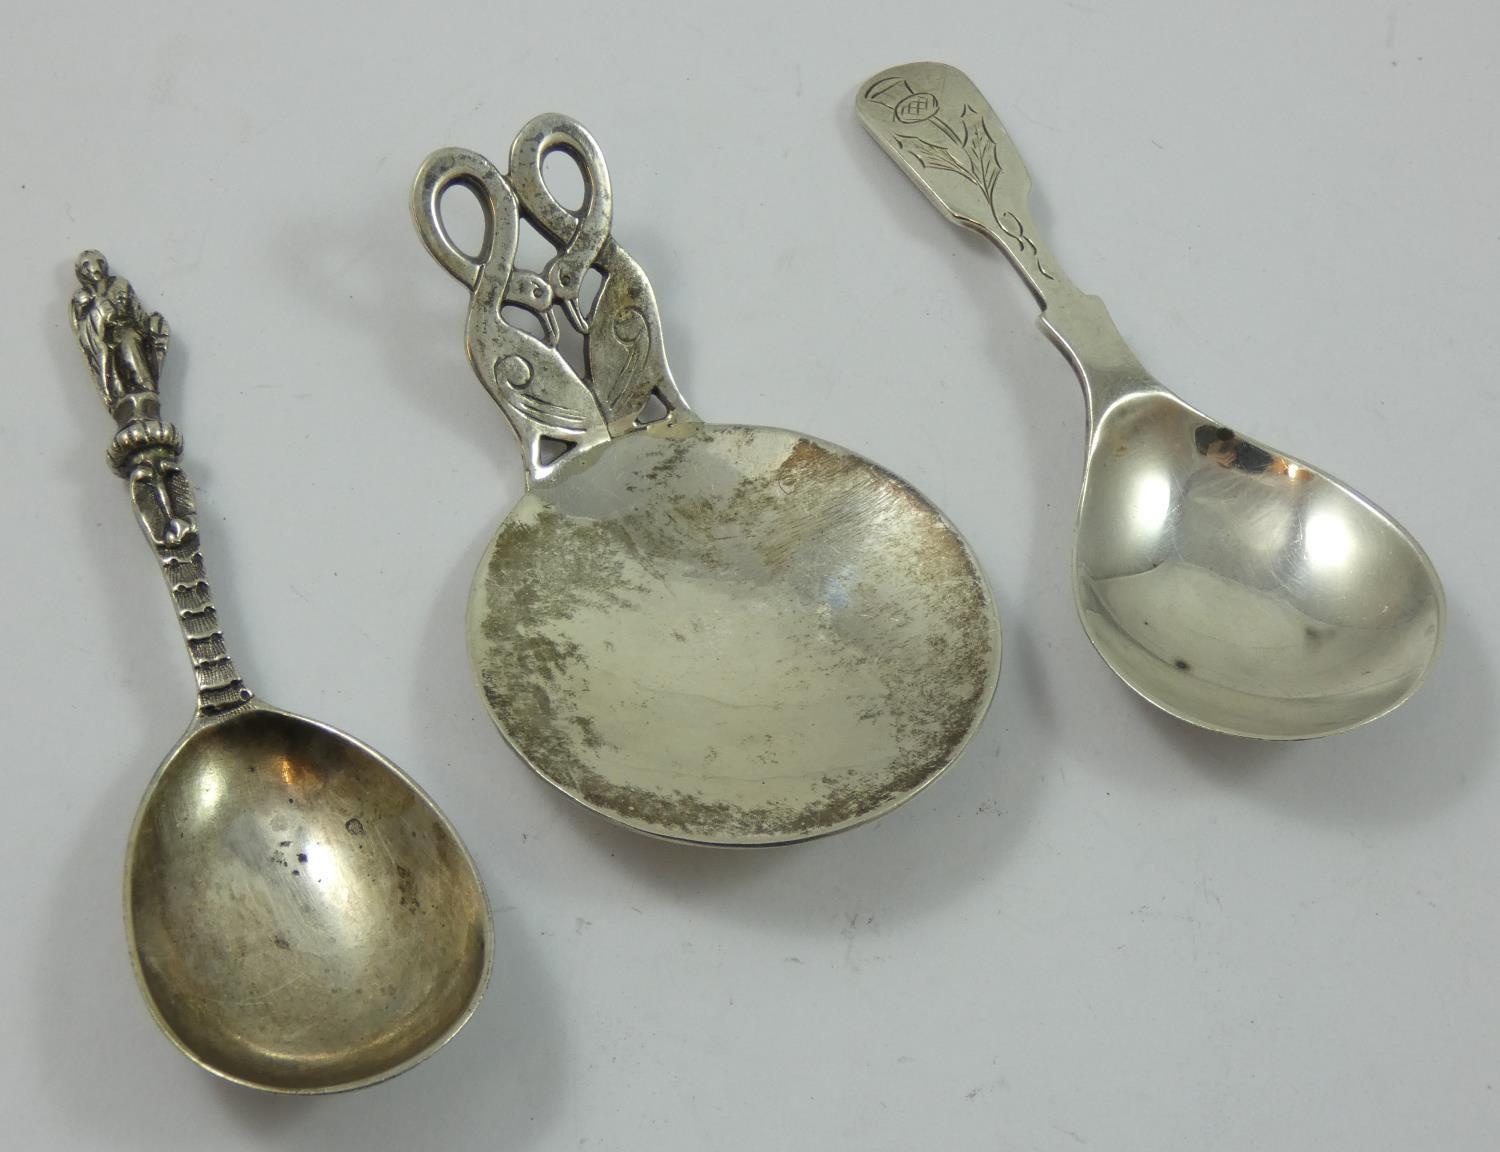 A hand made silver caddy spoon, by APRS, London 2000, Millennium duty mark, with pierced bird motif,